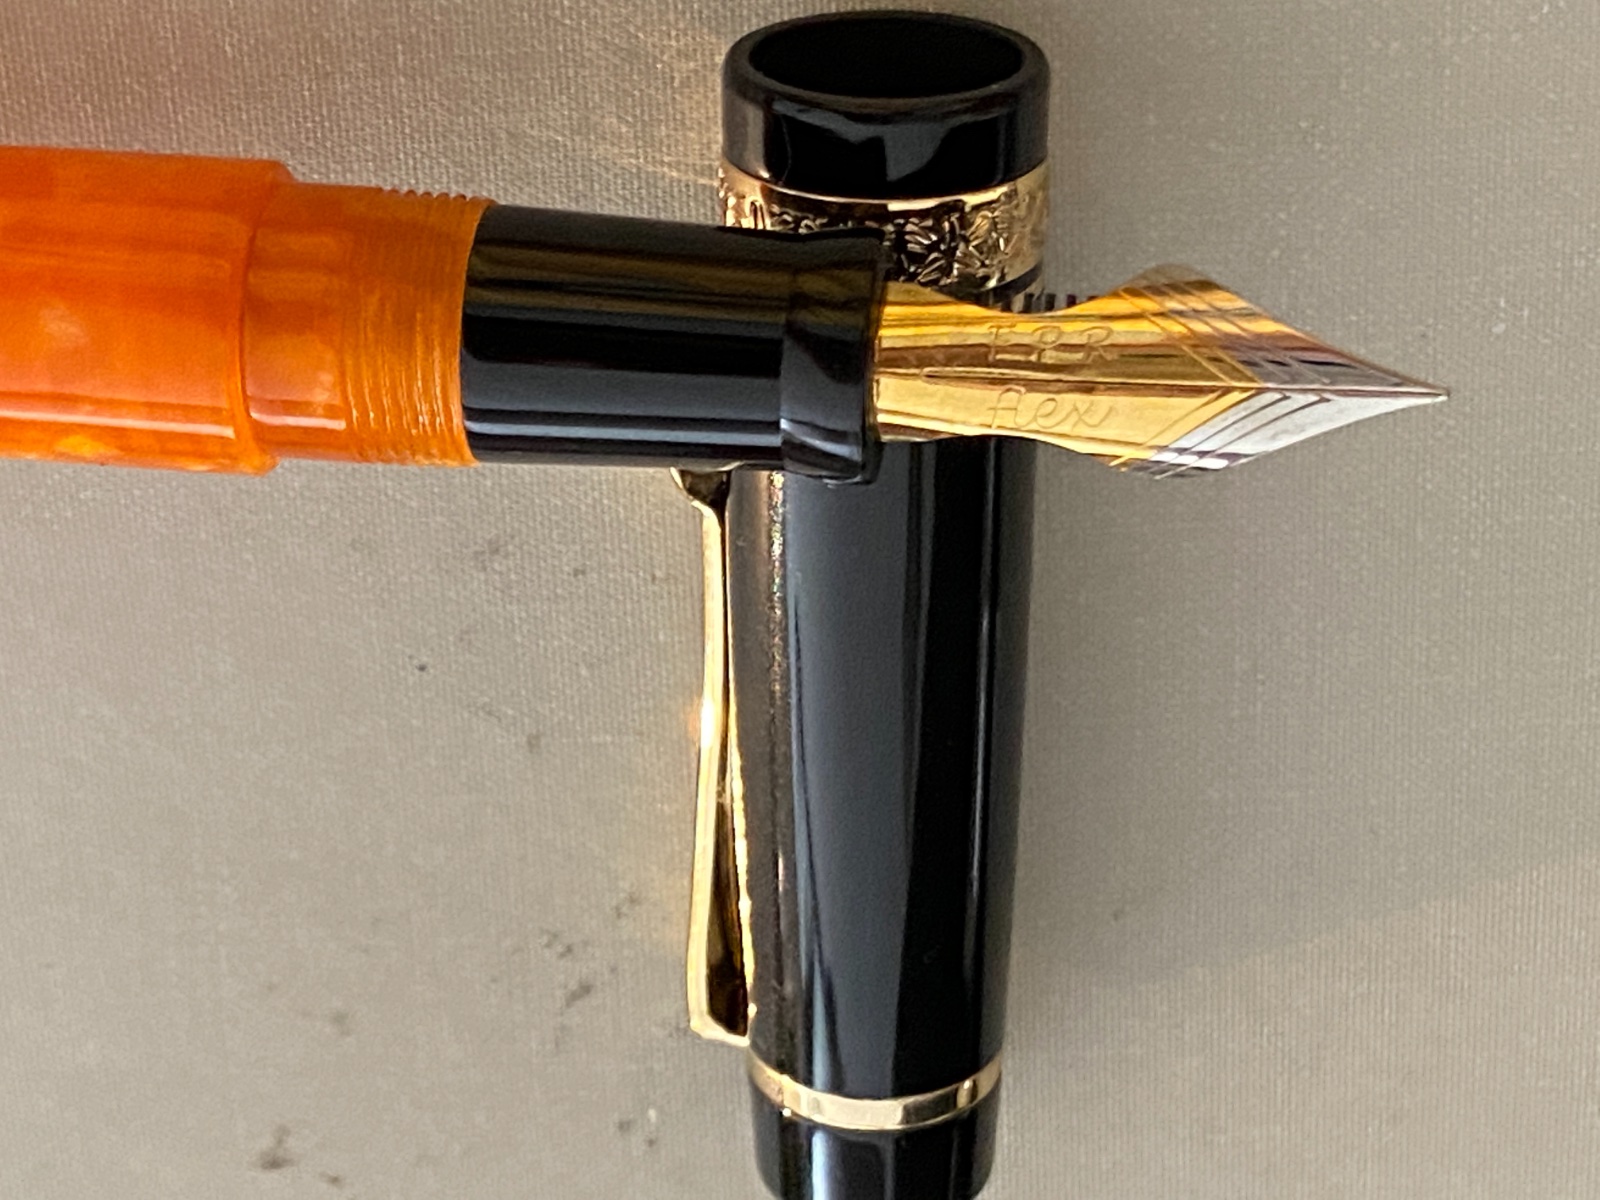 First Look At A Modified Zebra G Flex Nib - Fountain & Dip Pens - First  Stop - The Fountain Pen Network